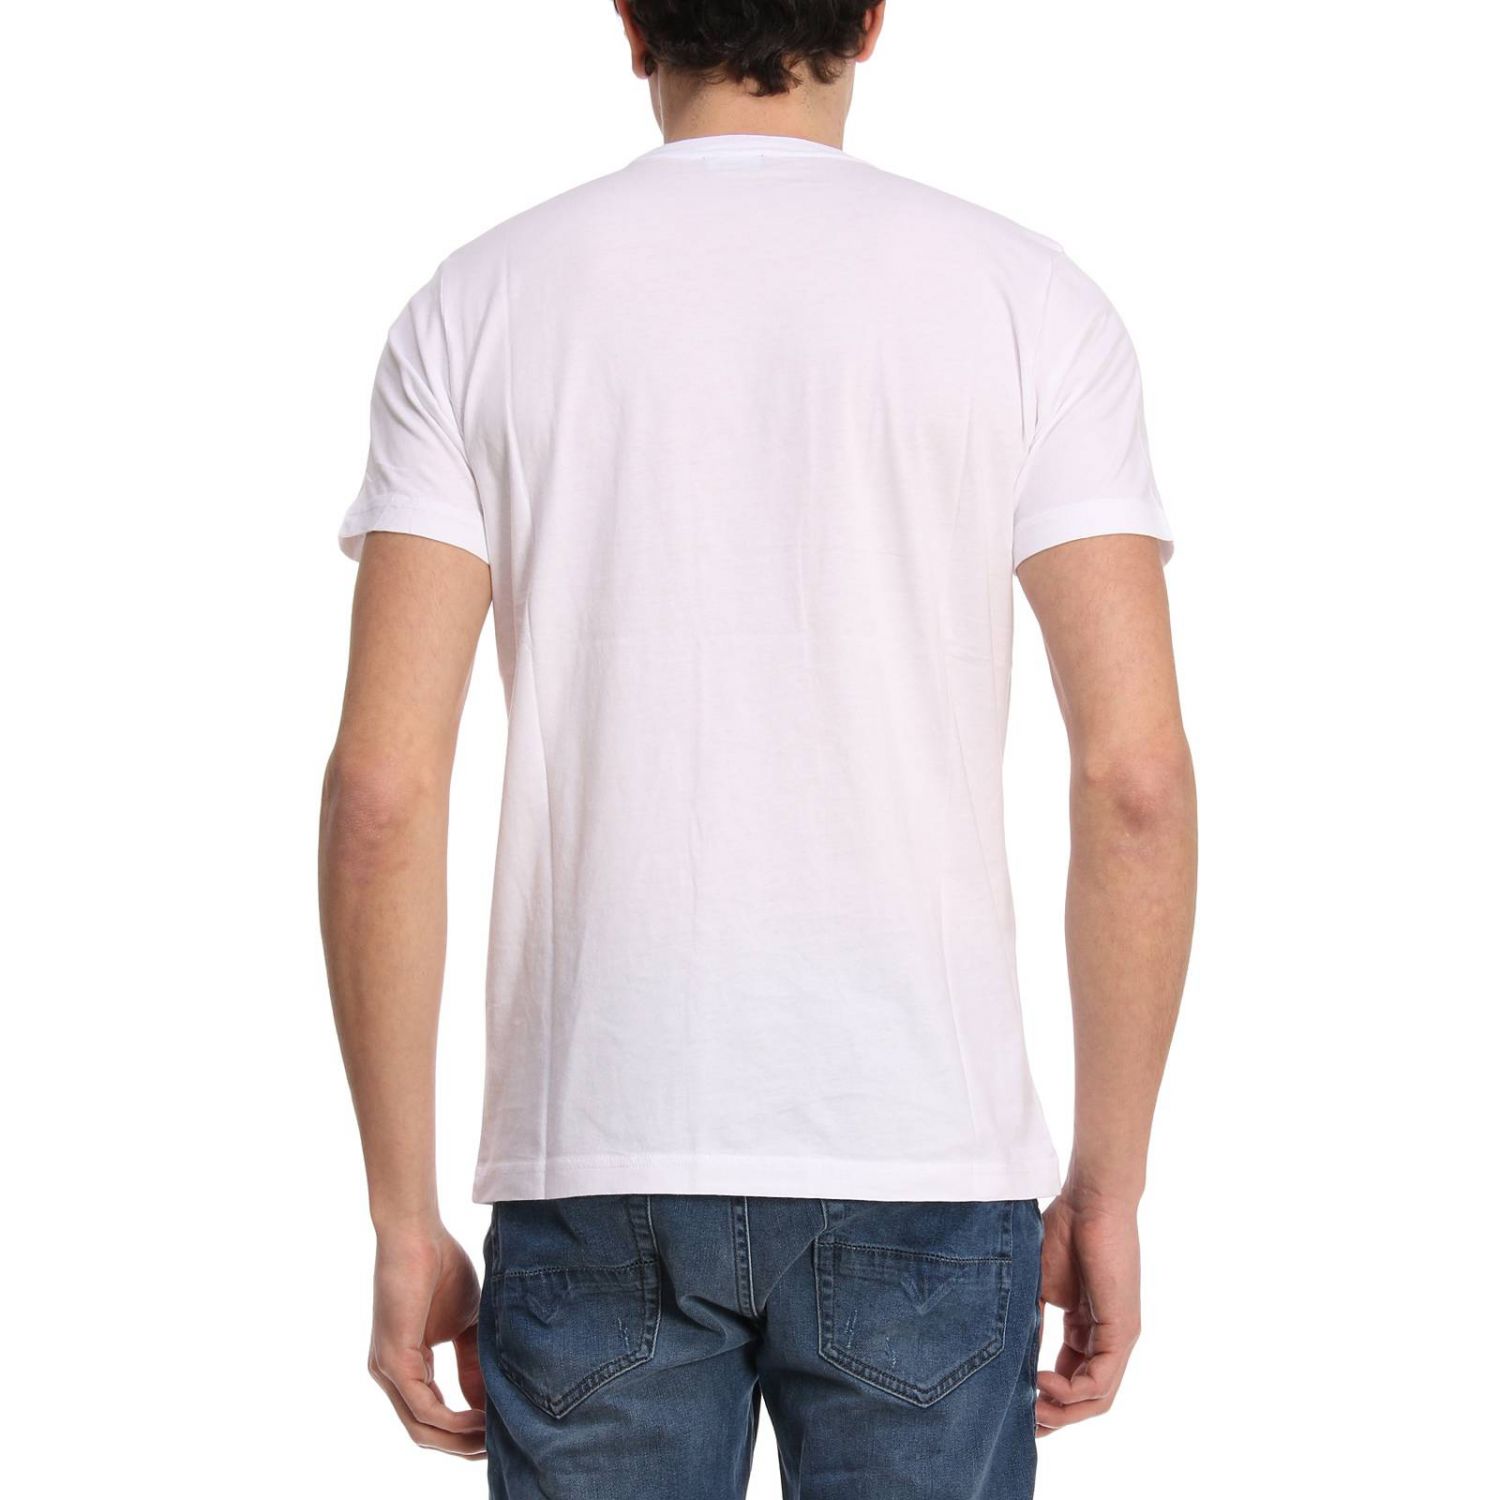 Diesel Outlet: T-shirt men - White | T-Shirt Diesel 00SA70 0091B GIGLIO.COM